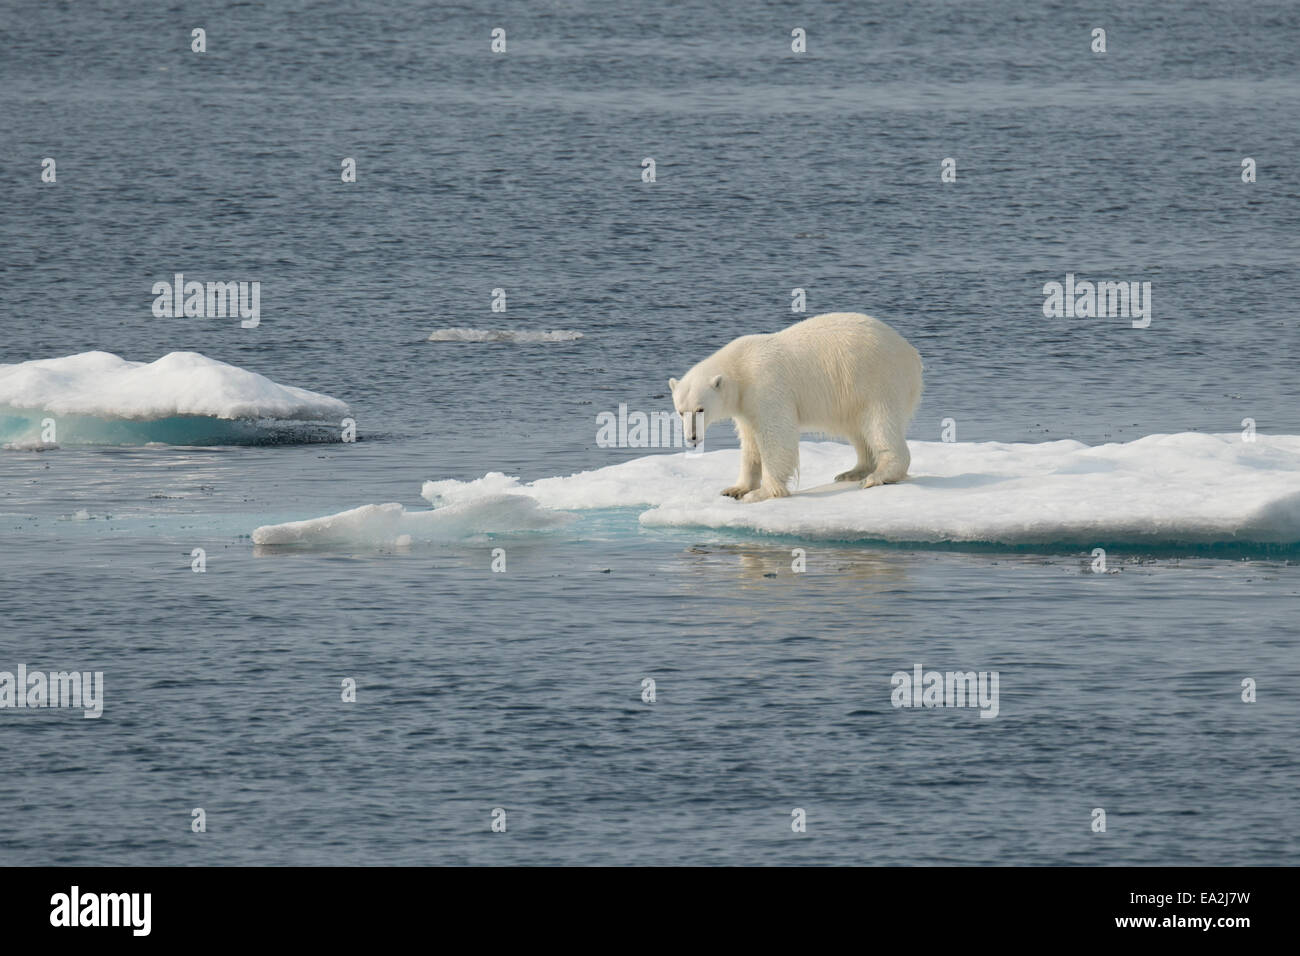 Male Polar Bear, Ursus maritimus, climbing on an iceberg after swimming, Baffin Island, Canadian Arctic. Stock Photo